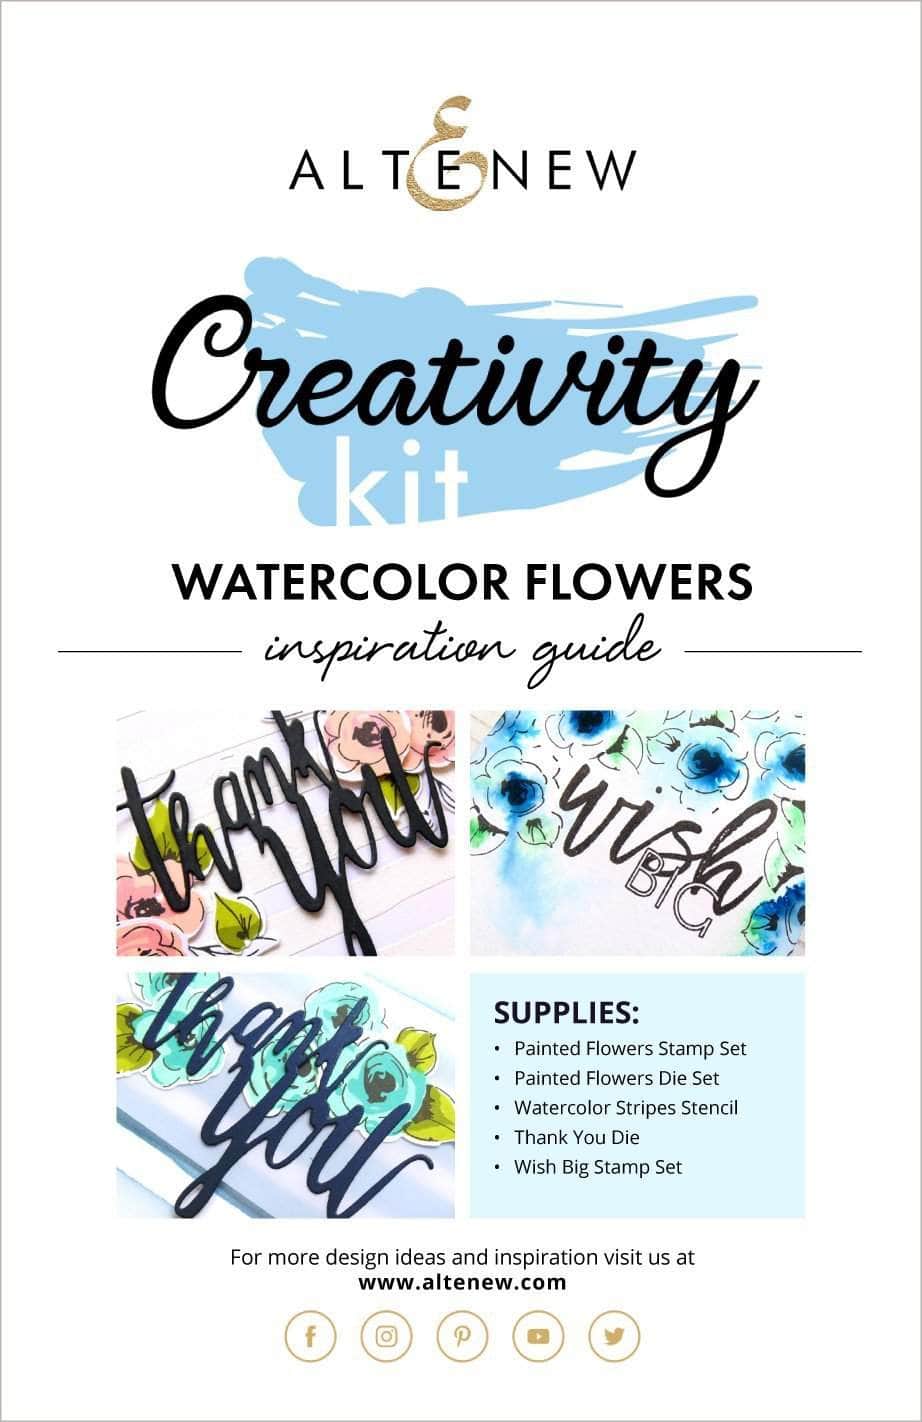 Printed Media Watercolor Flowers Creativity Kit Inspiration Guide